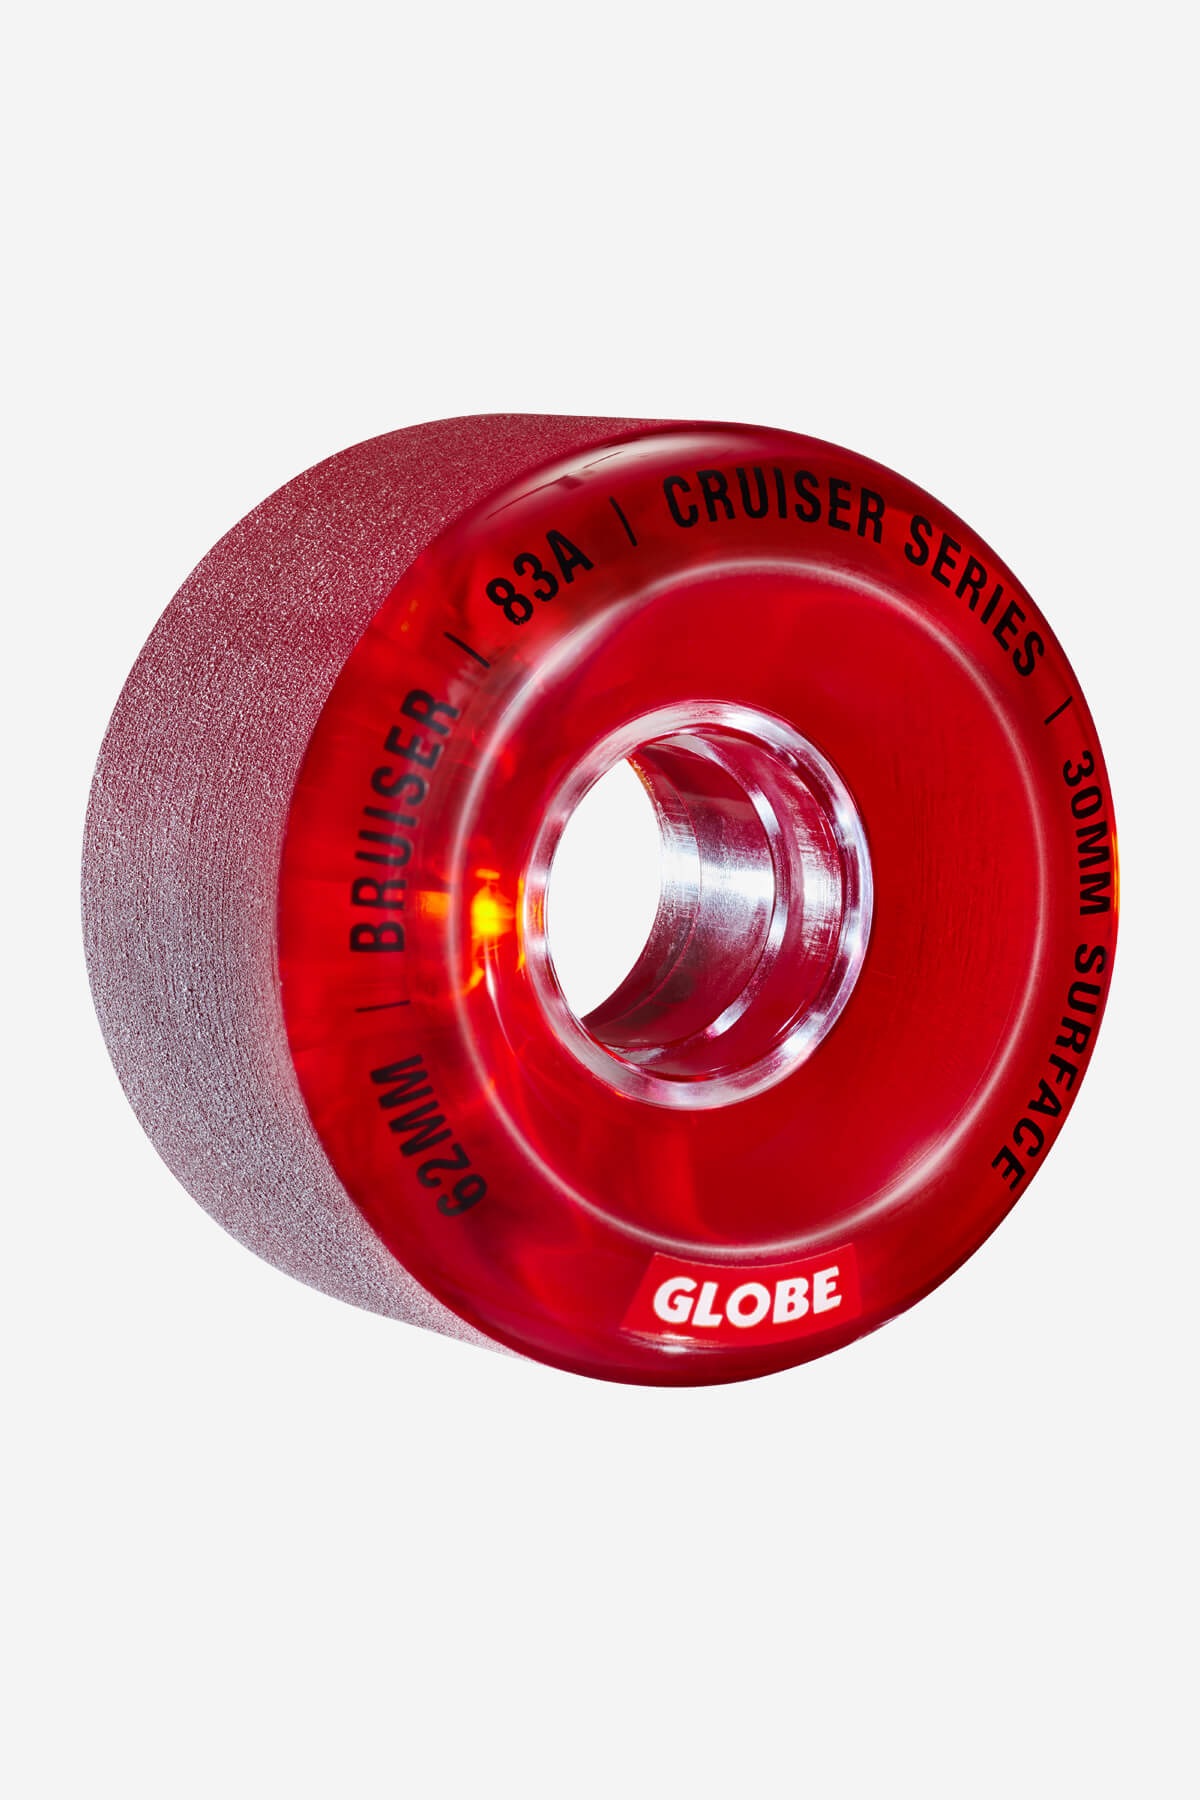 Globe Wheels Bruiser Cruiser Skateboard Wheel 62mm in Clear Red